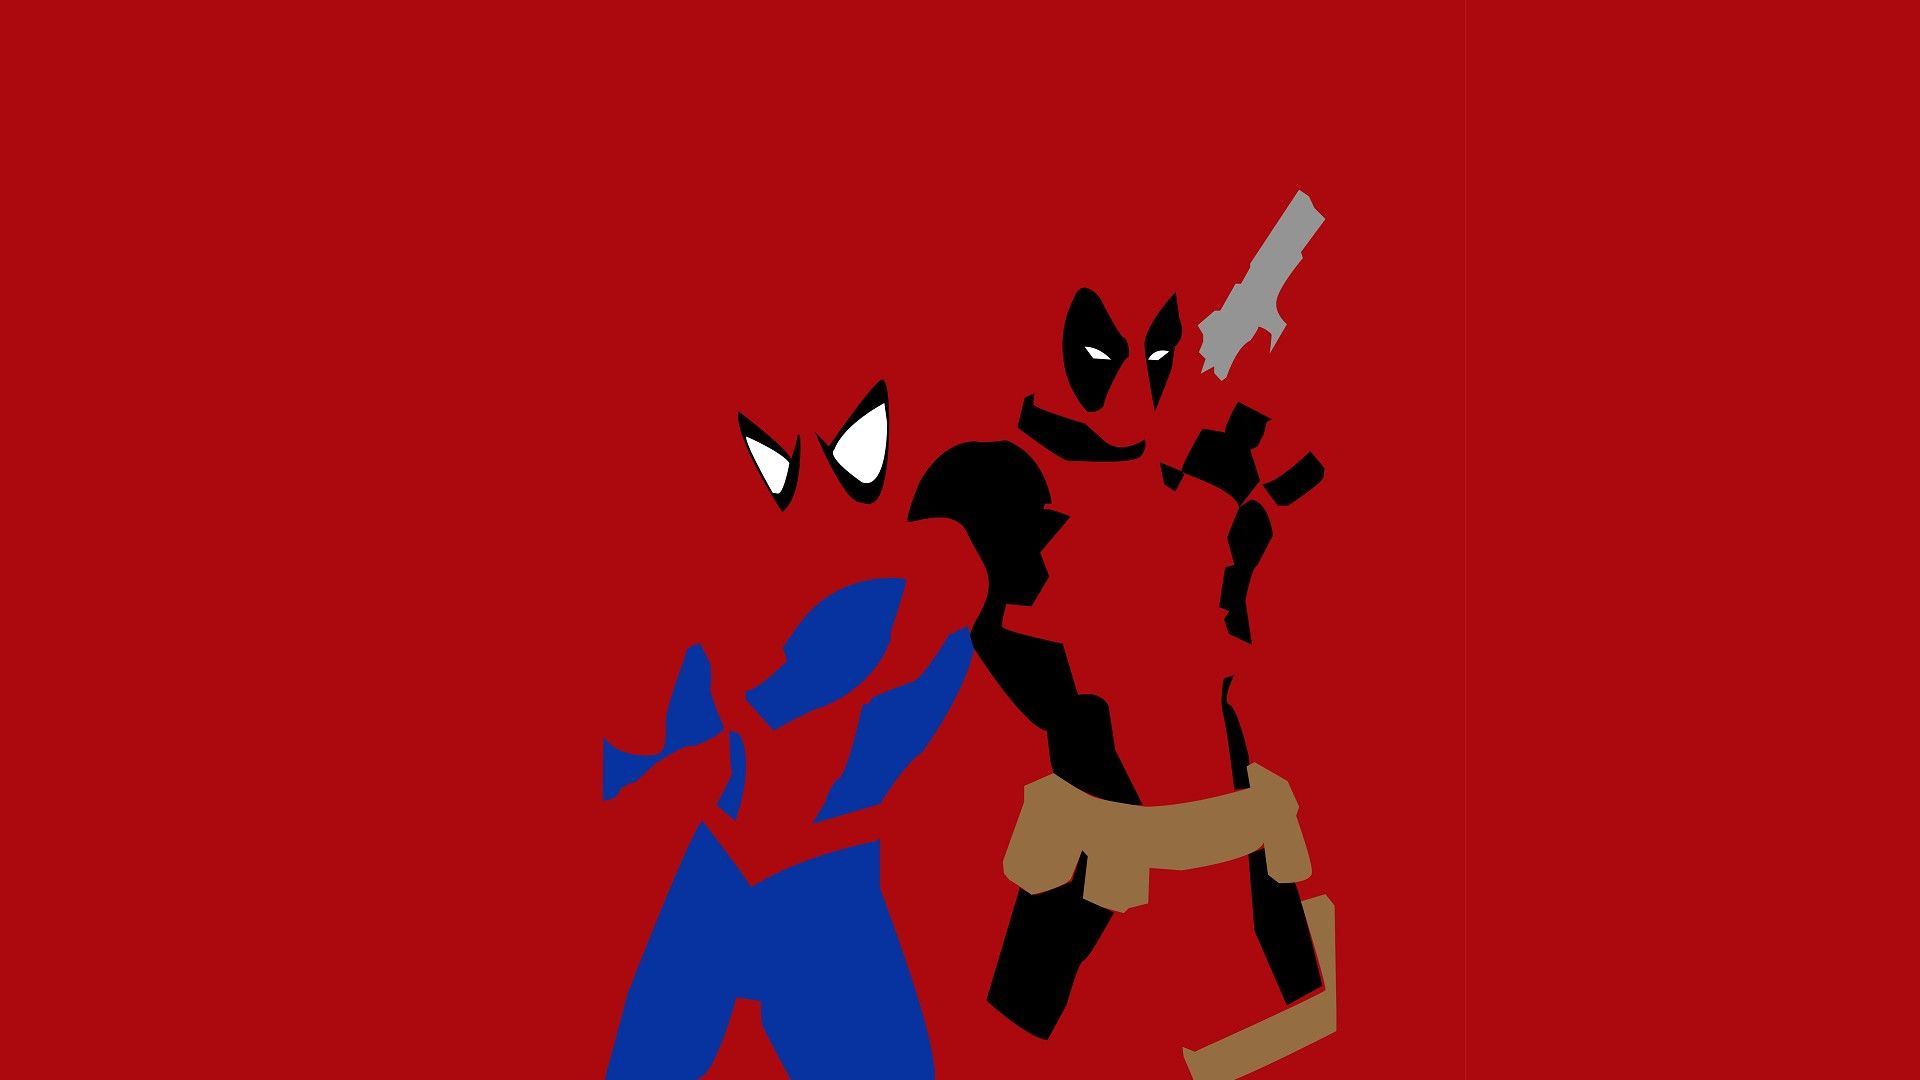 Deadpool and Spider Man Wallpaper